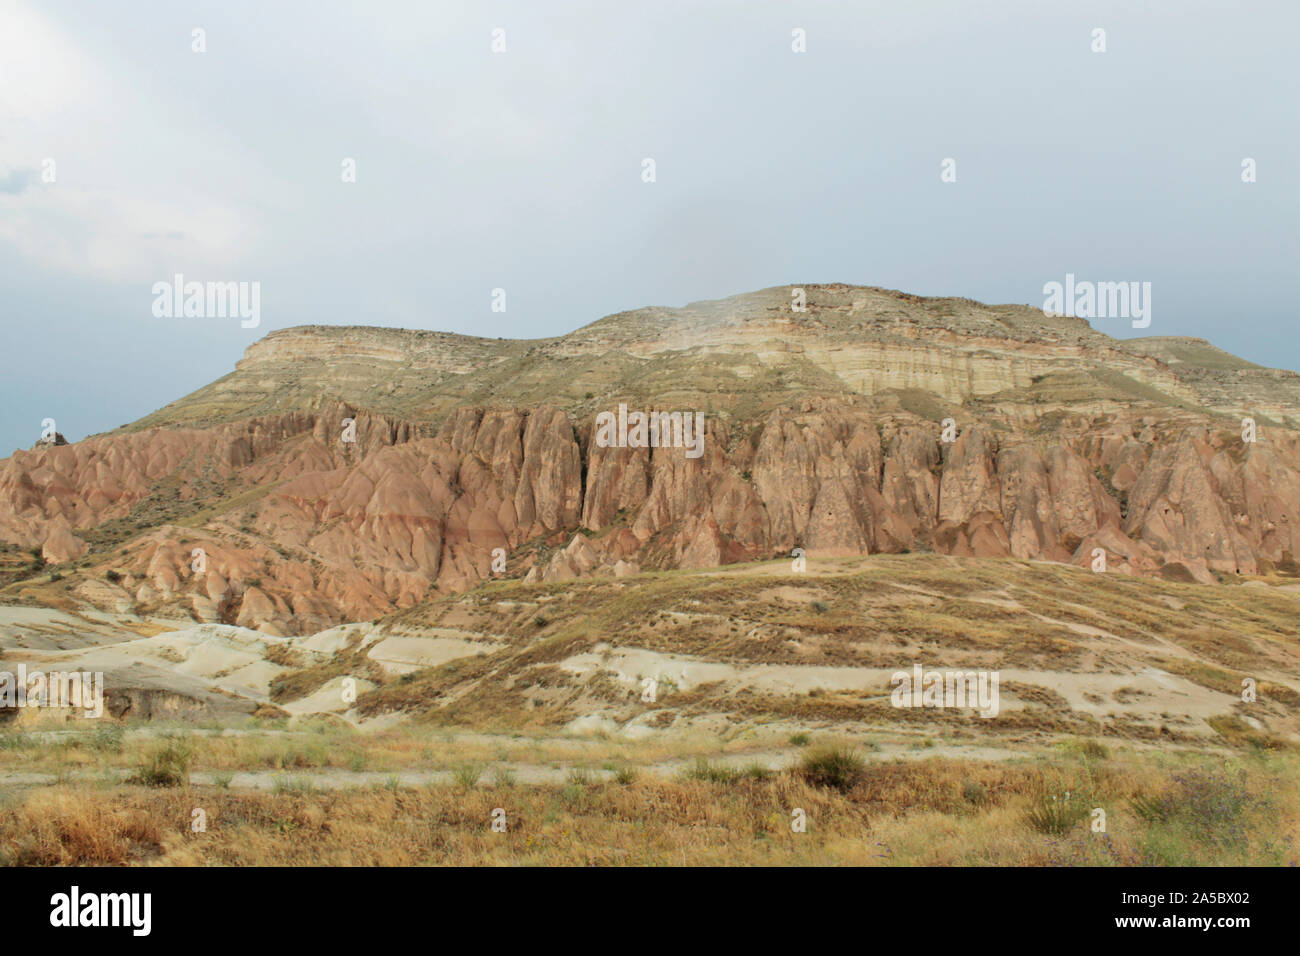 Riesige Berg im Reiseland beliebt - Kappadokien, Türkei. Ruhige Landschaft. Helle Farben Stockfoto